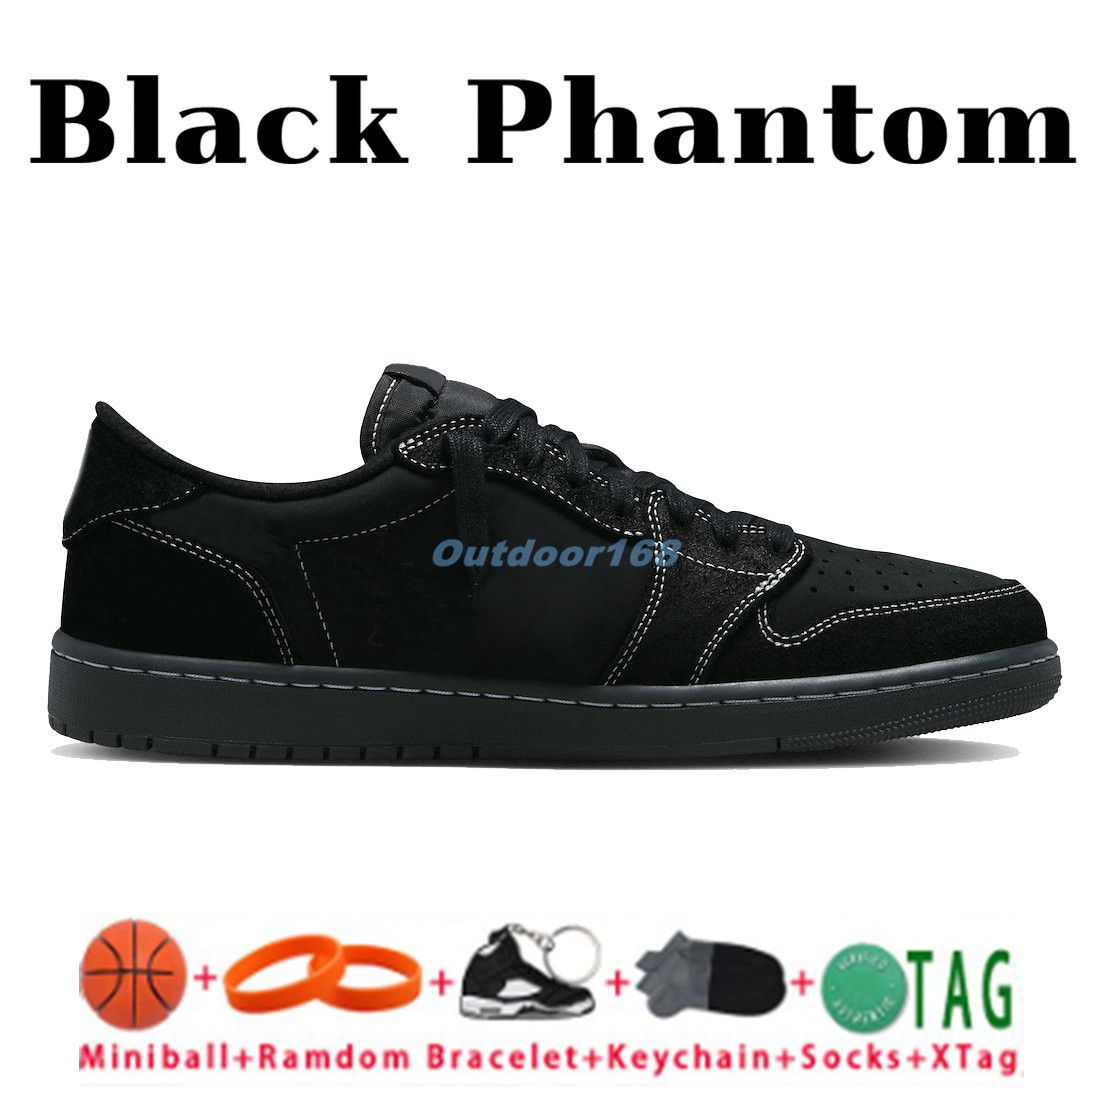 7. Siyah Phantom Oog